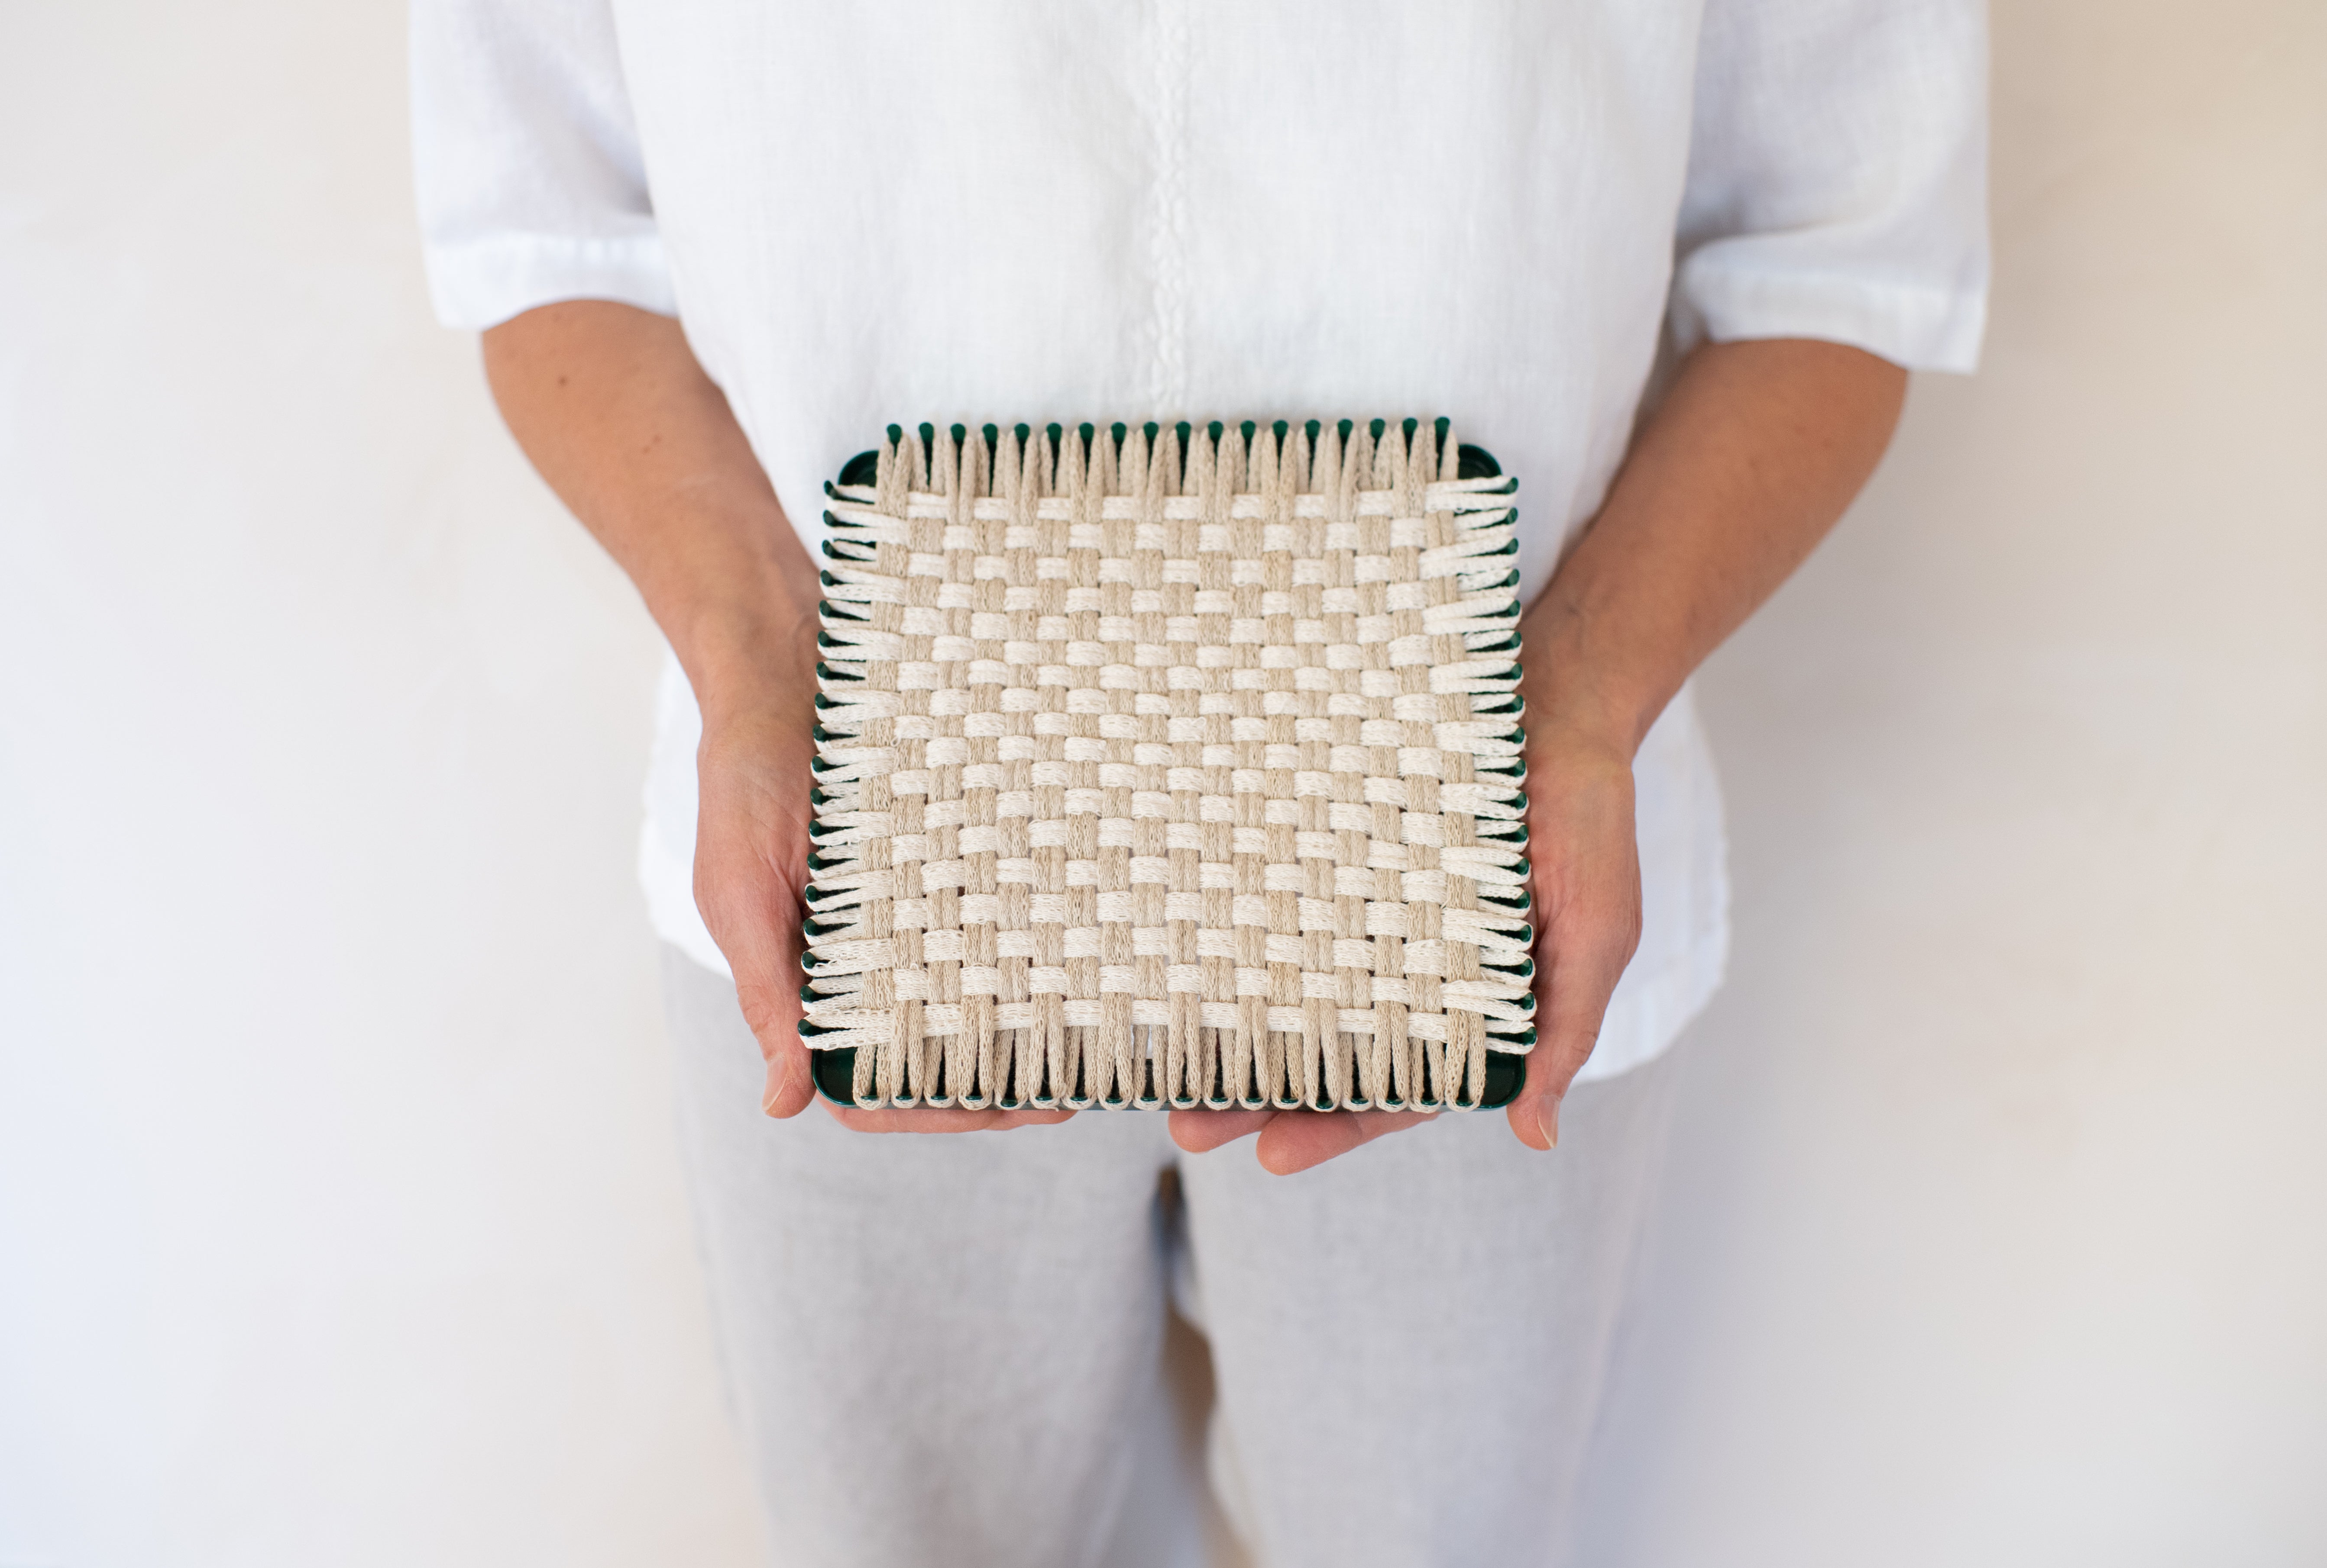 Cotton Loops for Small Loom – Kate Kilmurray